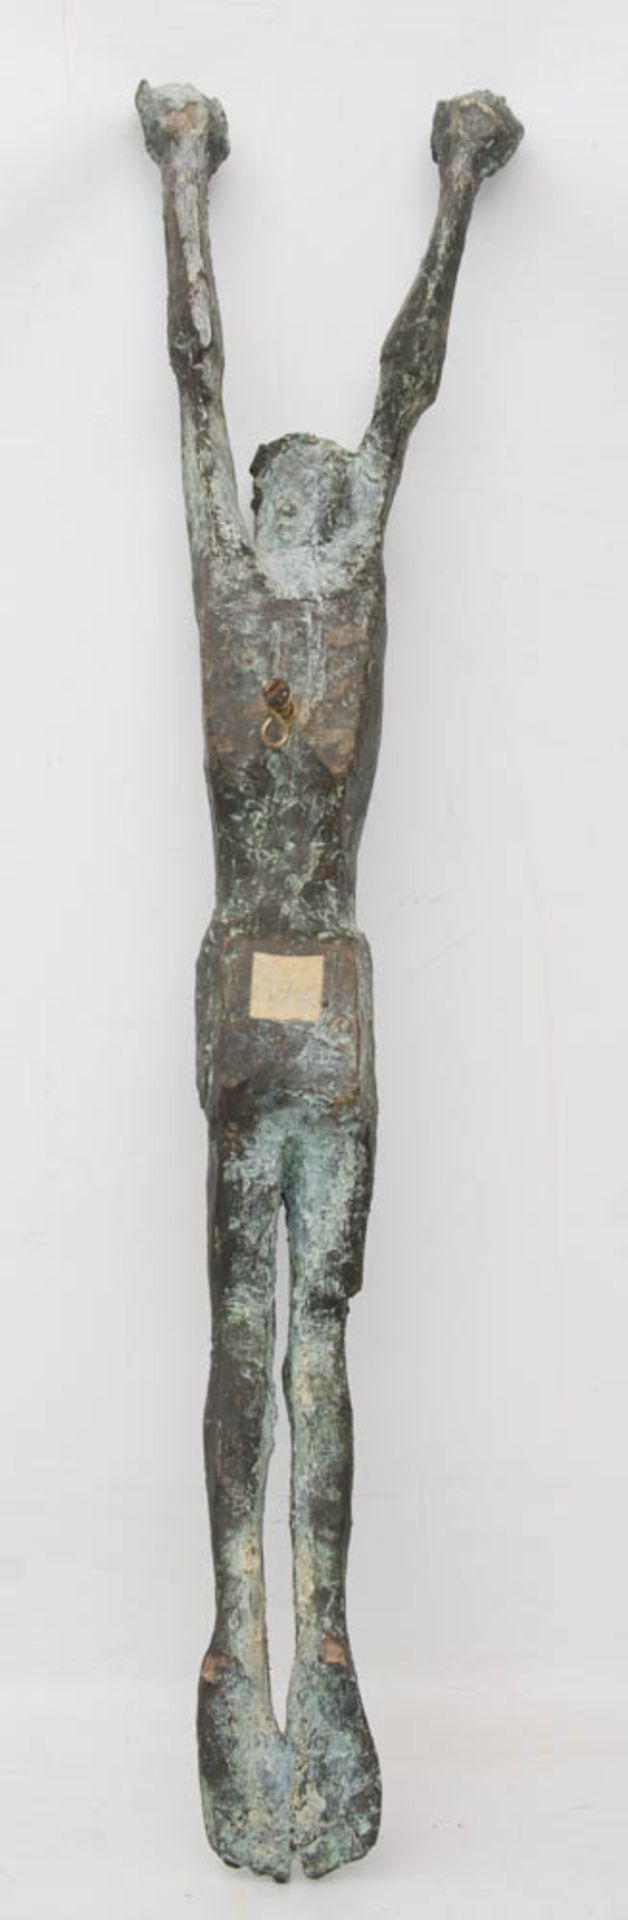 UNBEKANNTER KÜNSTLER, Christus ohne Kreuz, Bronzeguss, 20 Jh.Starke Patina, guter Zustand.69 cm L. - Image 5 of 5